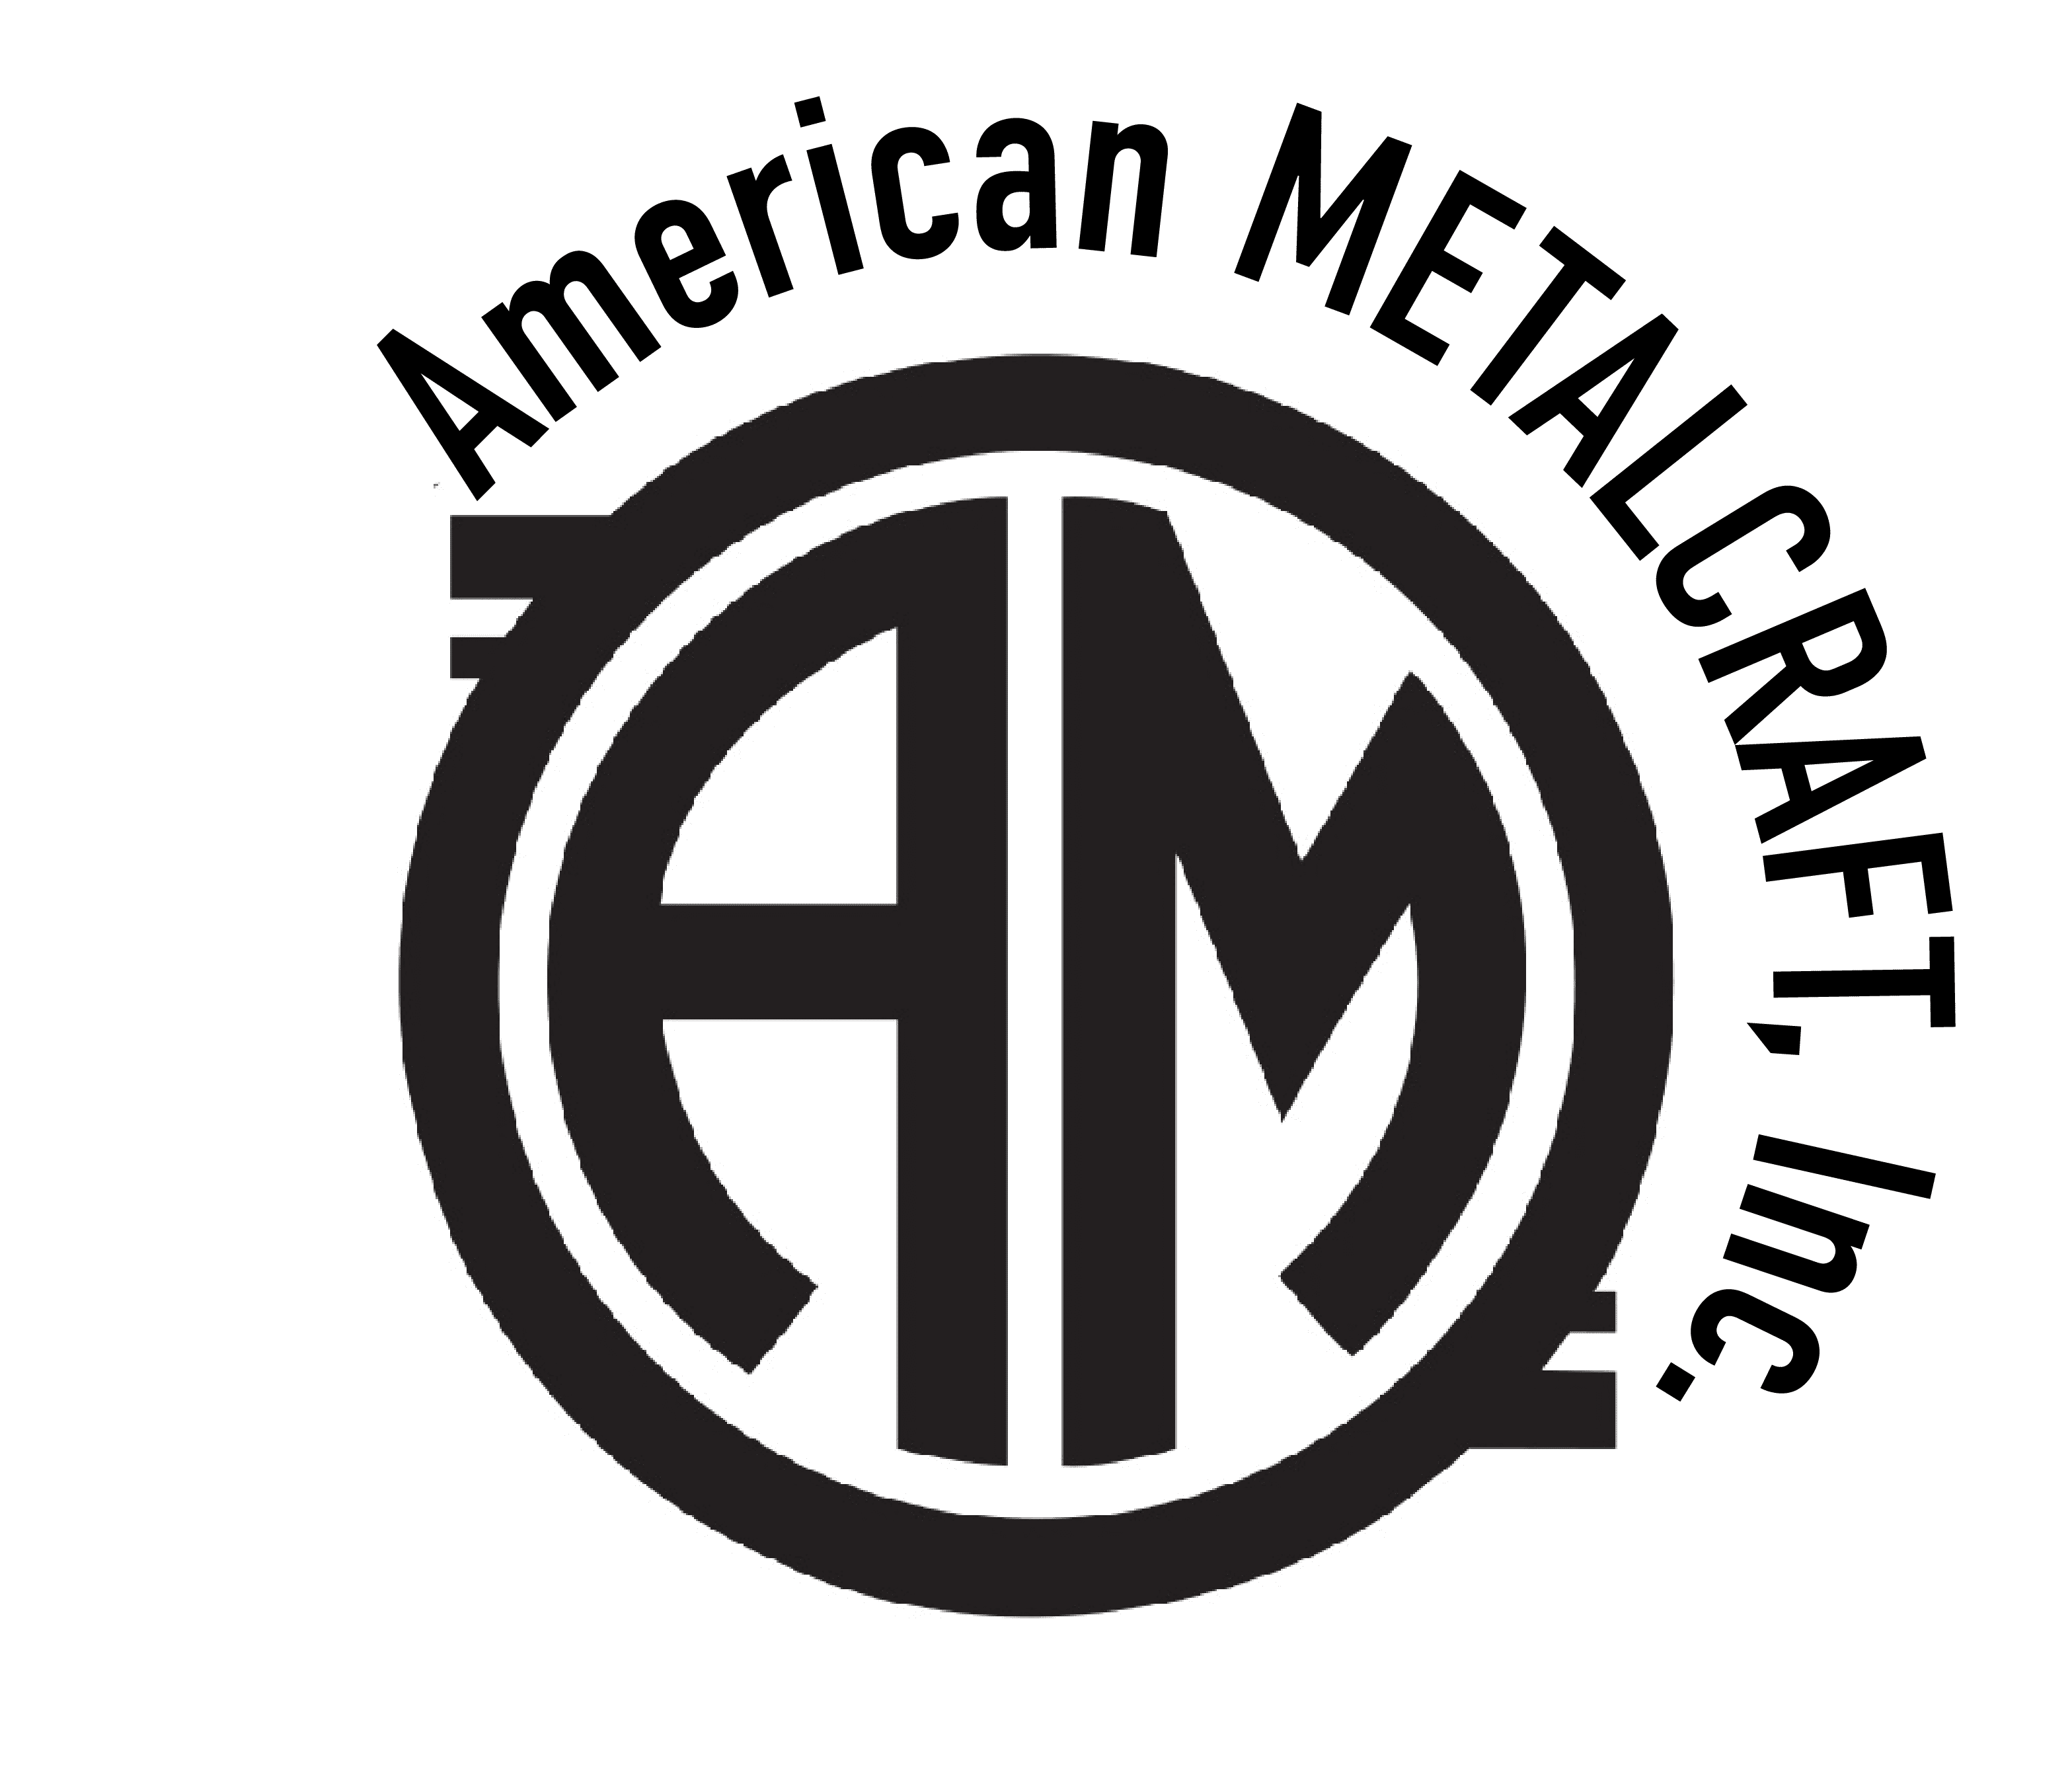 AMERICAN METALCRAFT LOGO